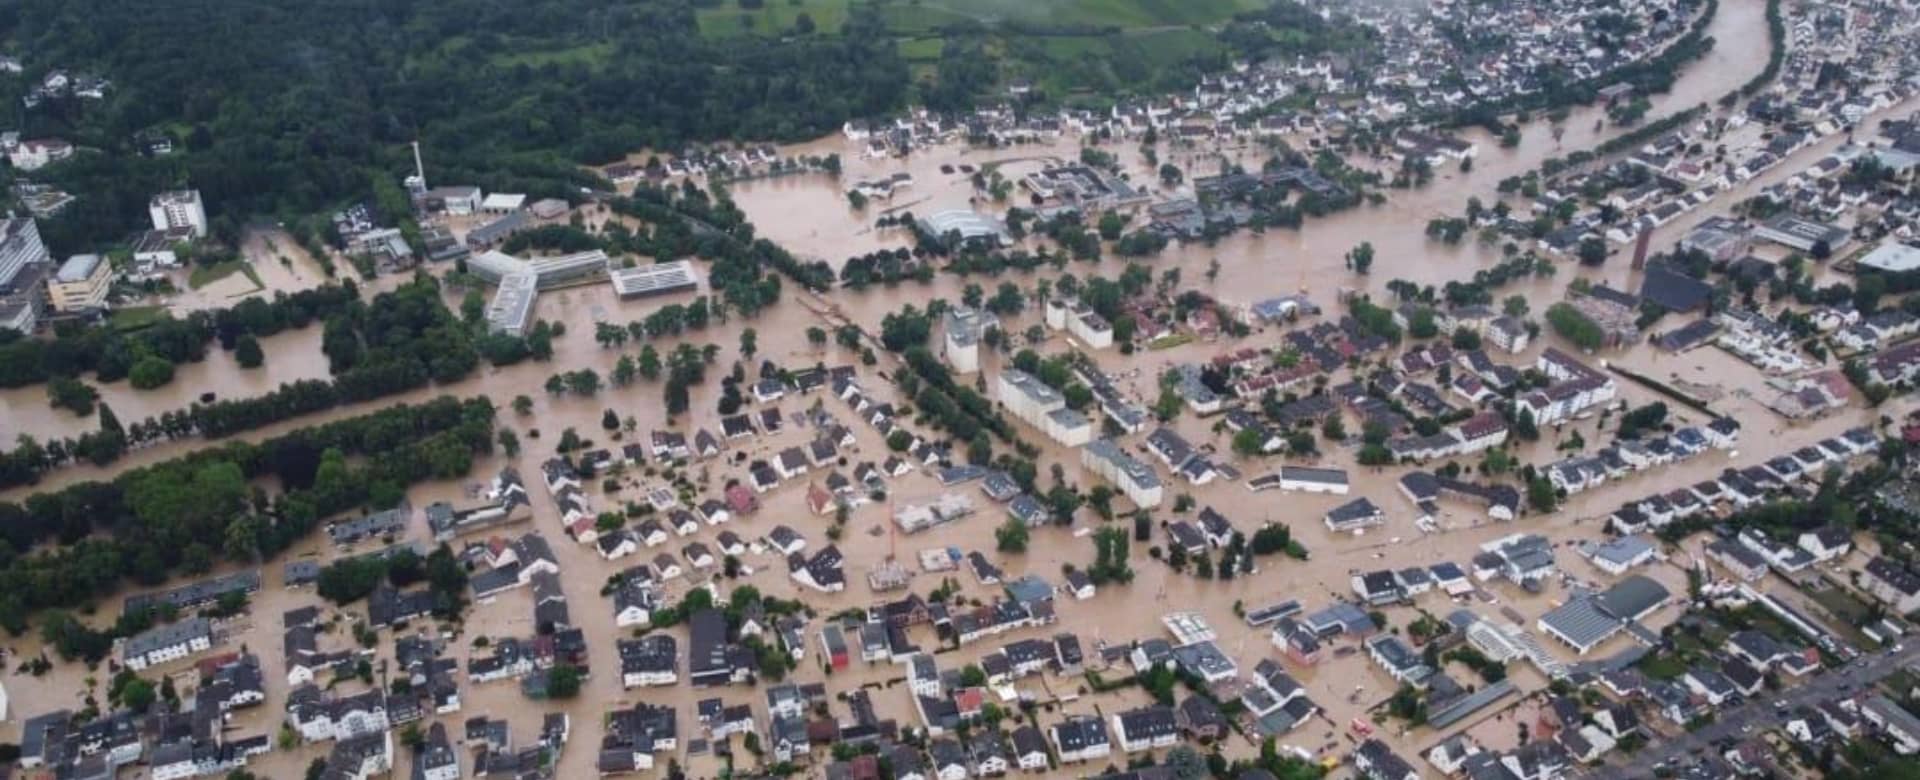 Überflutung Ahrtal 2021